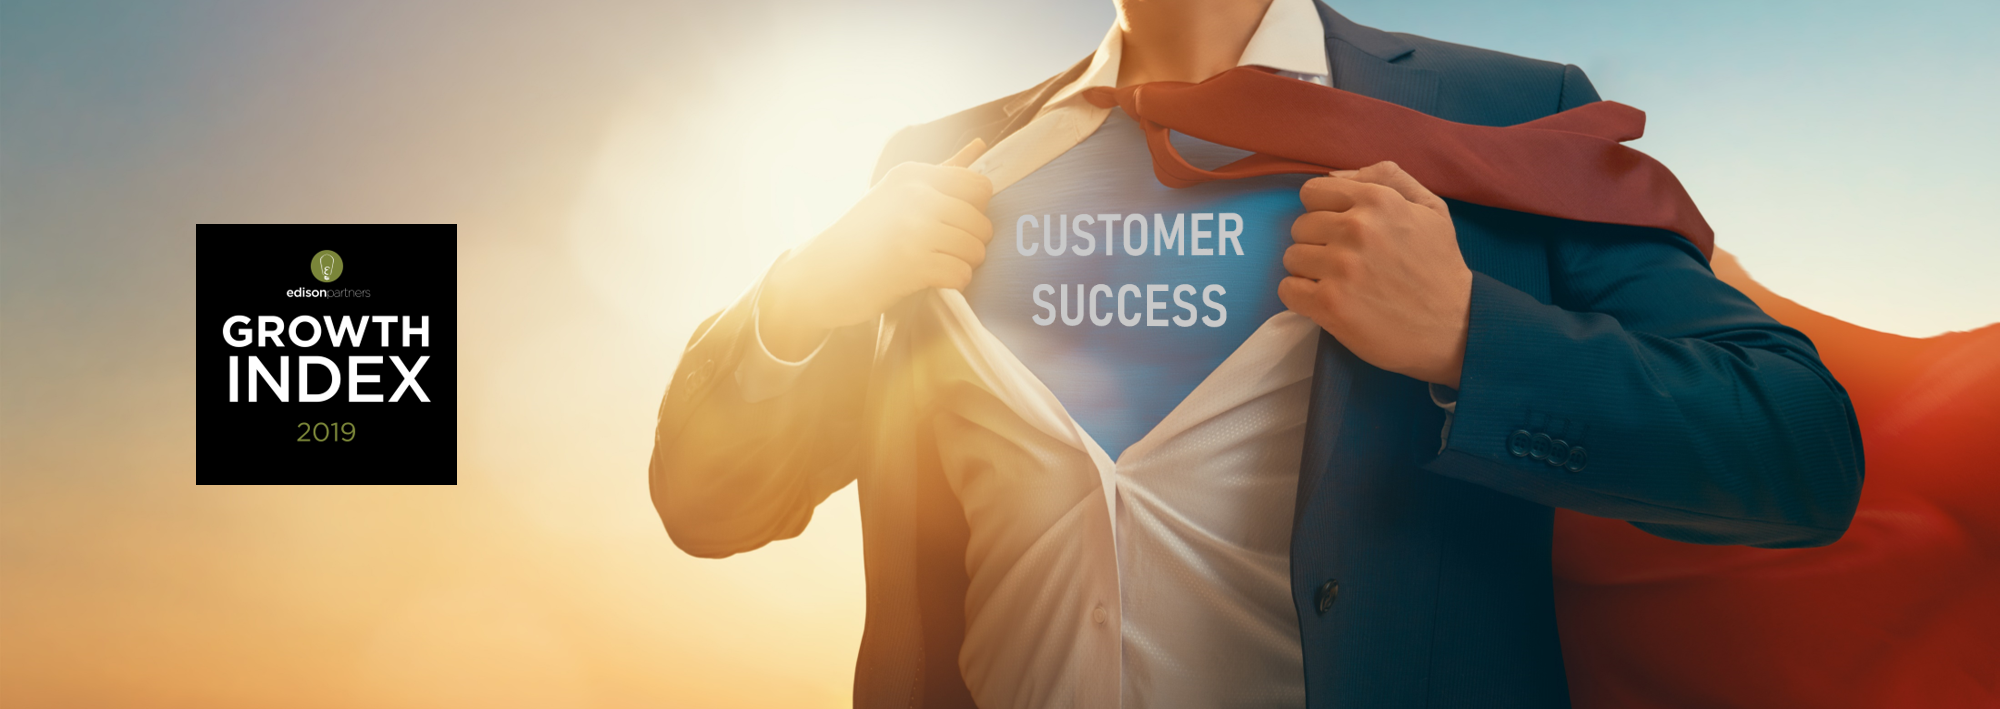 Customer Success: The New Superhero of Fast Growing Companies